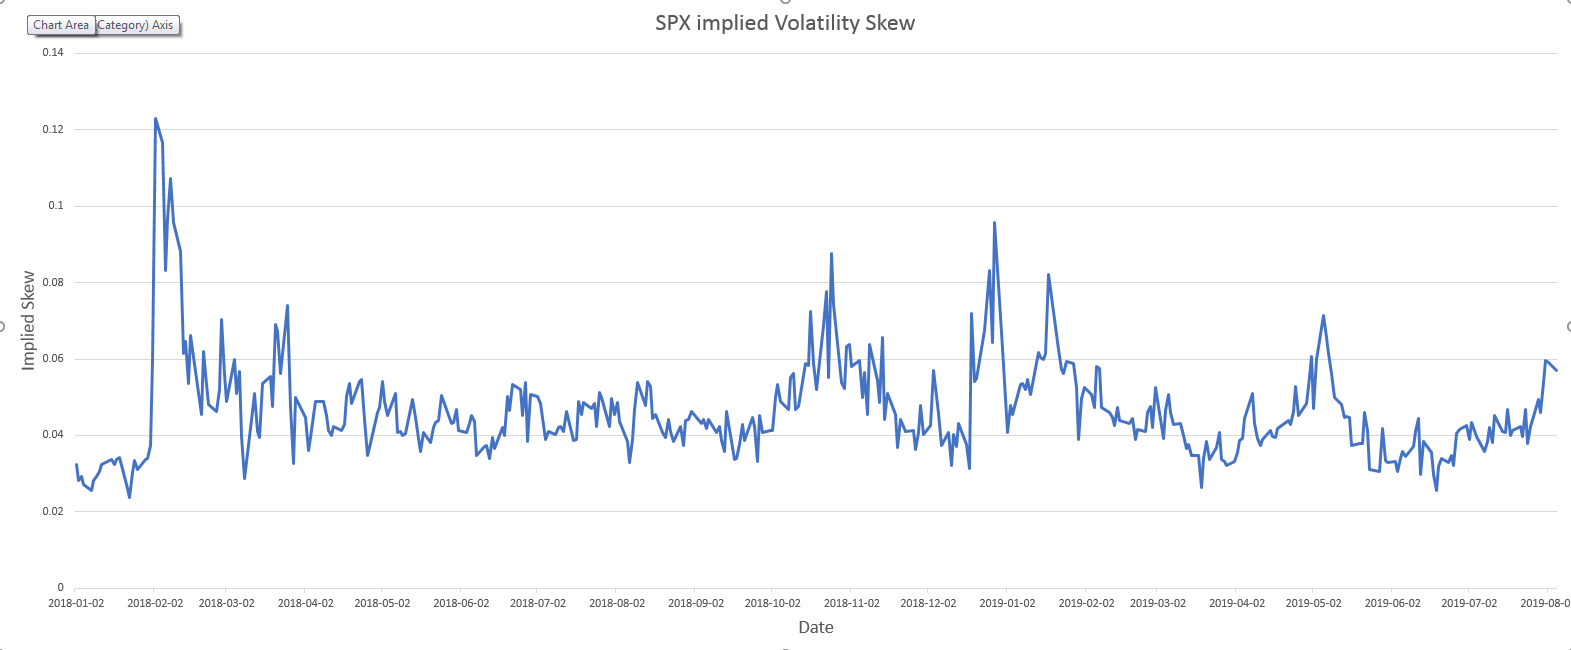 SPX Volatility Skew